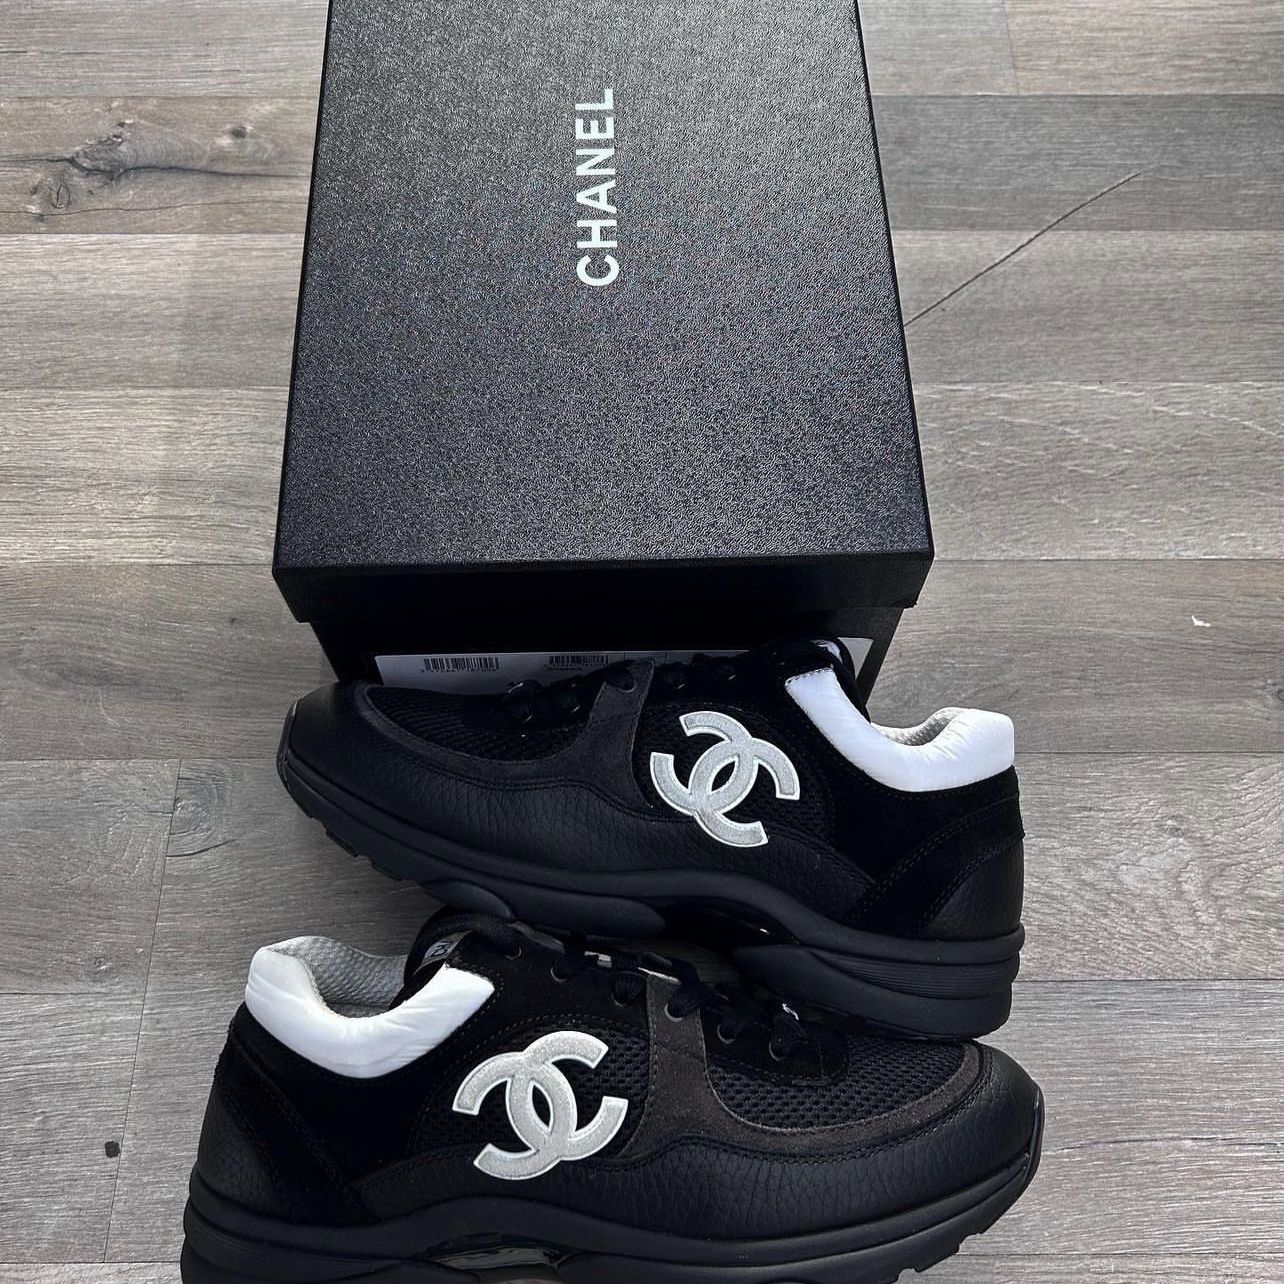 Chanel Black Shoes for Sale in Atlanta, GA - OfferUp